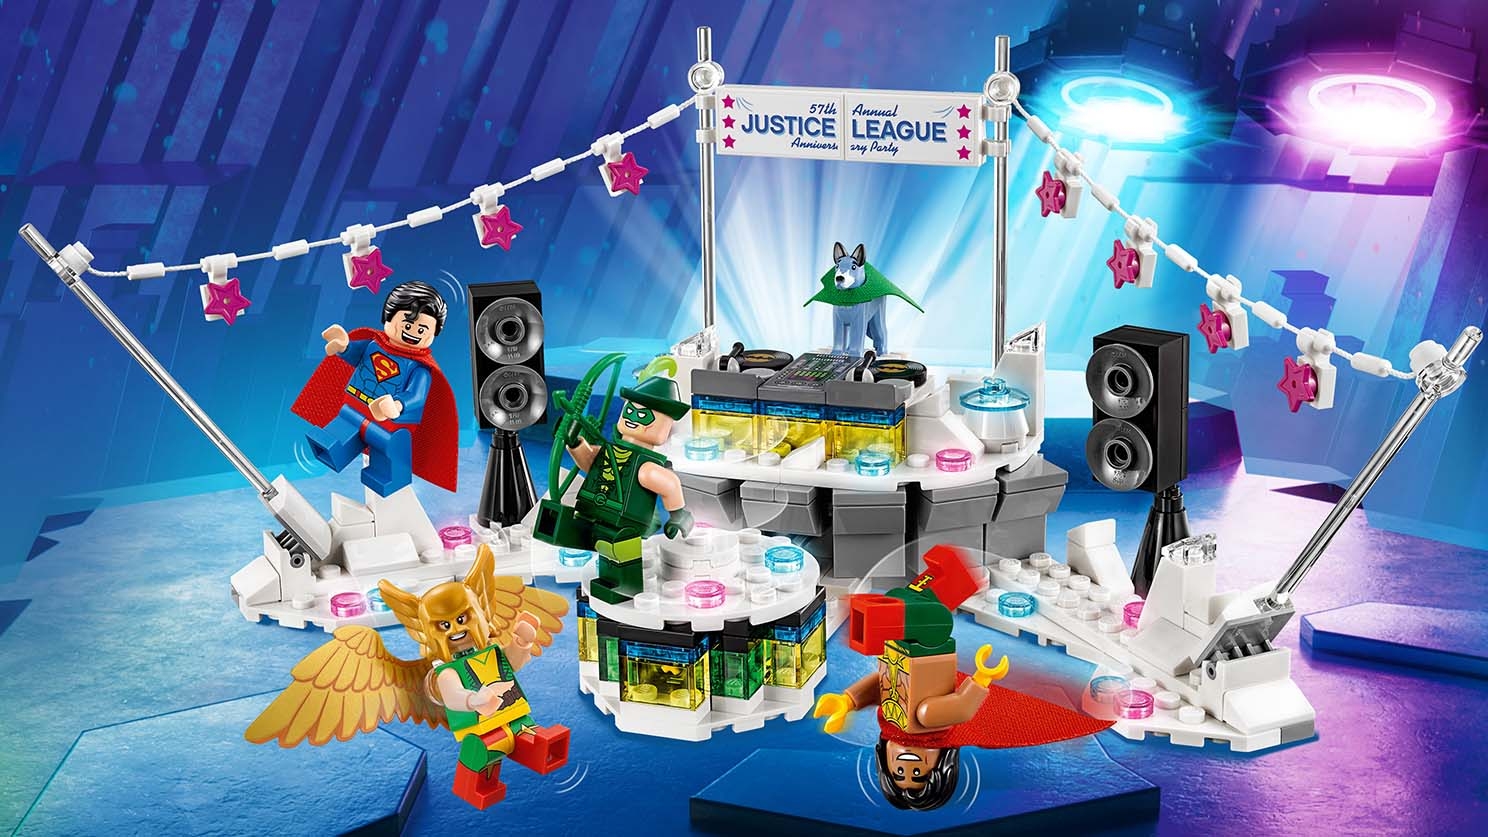 LEGO Batman Movie DC The Justice League Anniversary Party Set